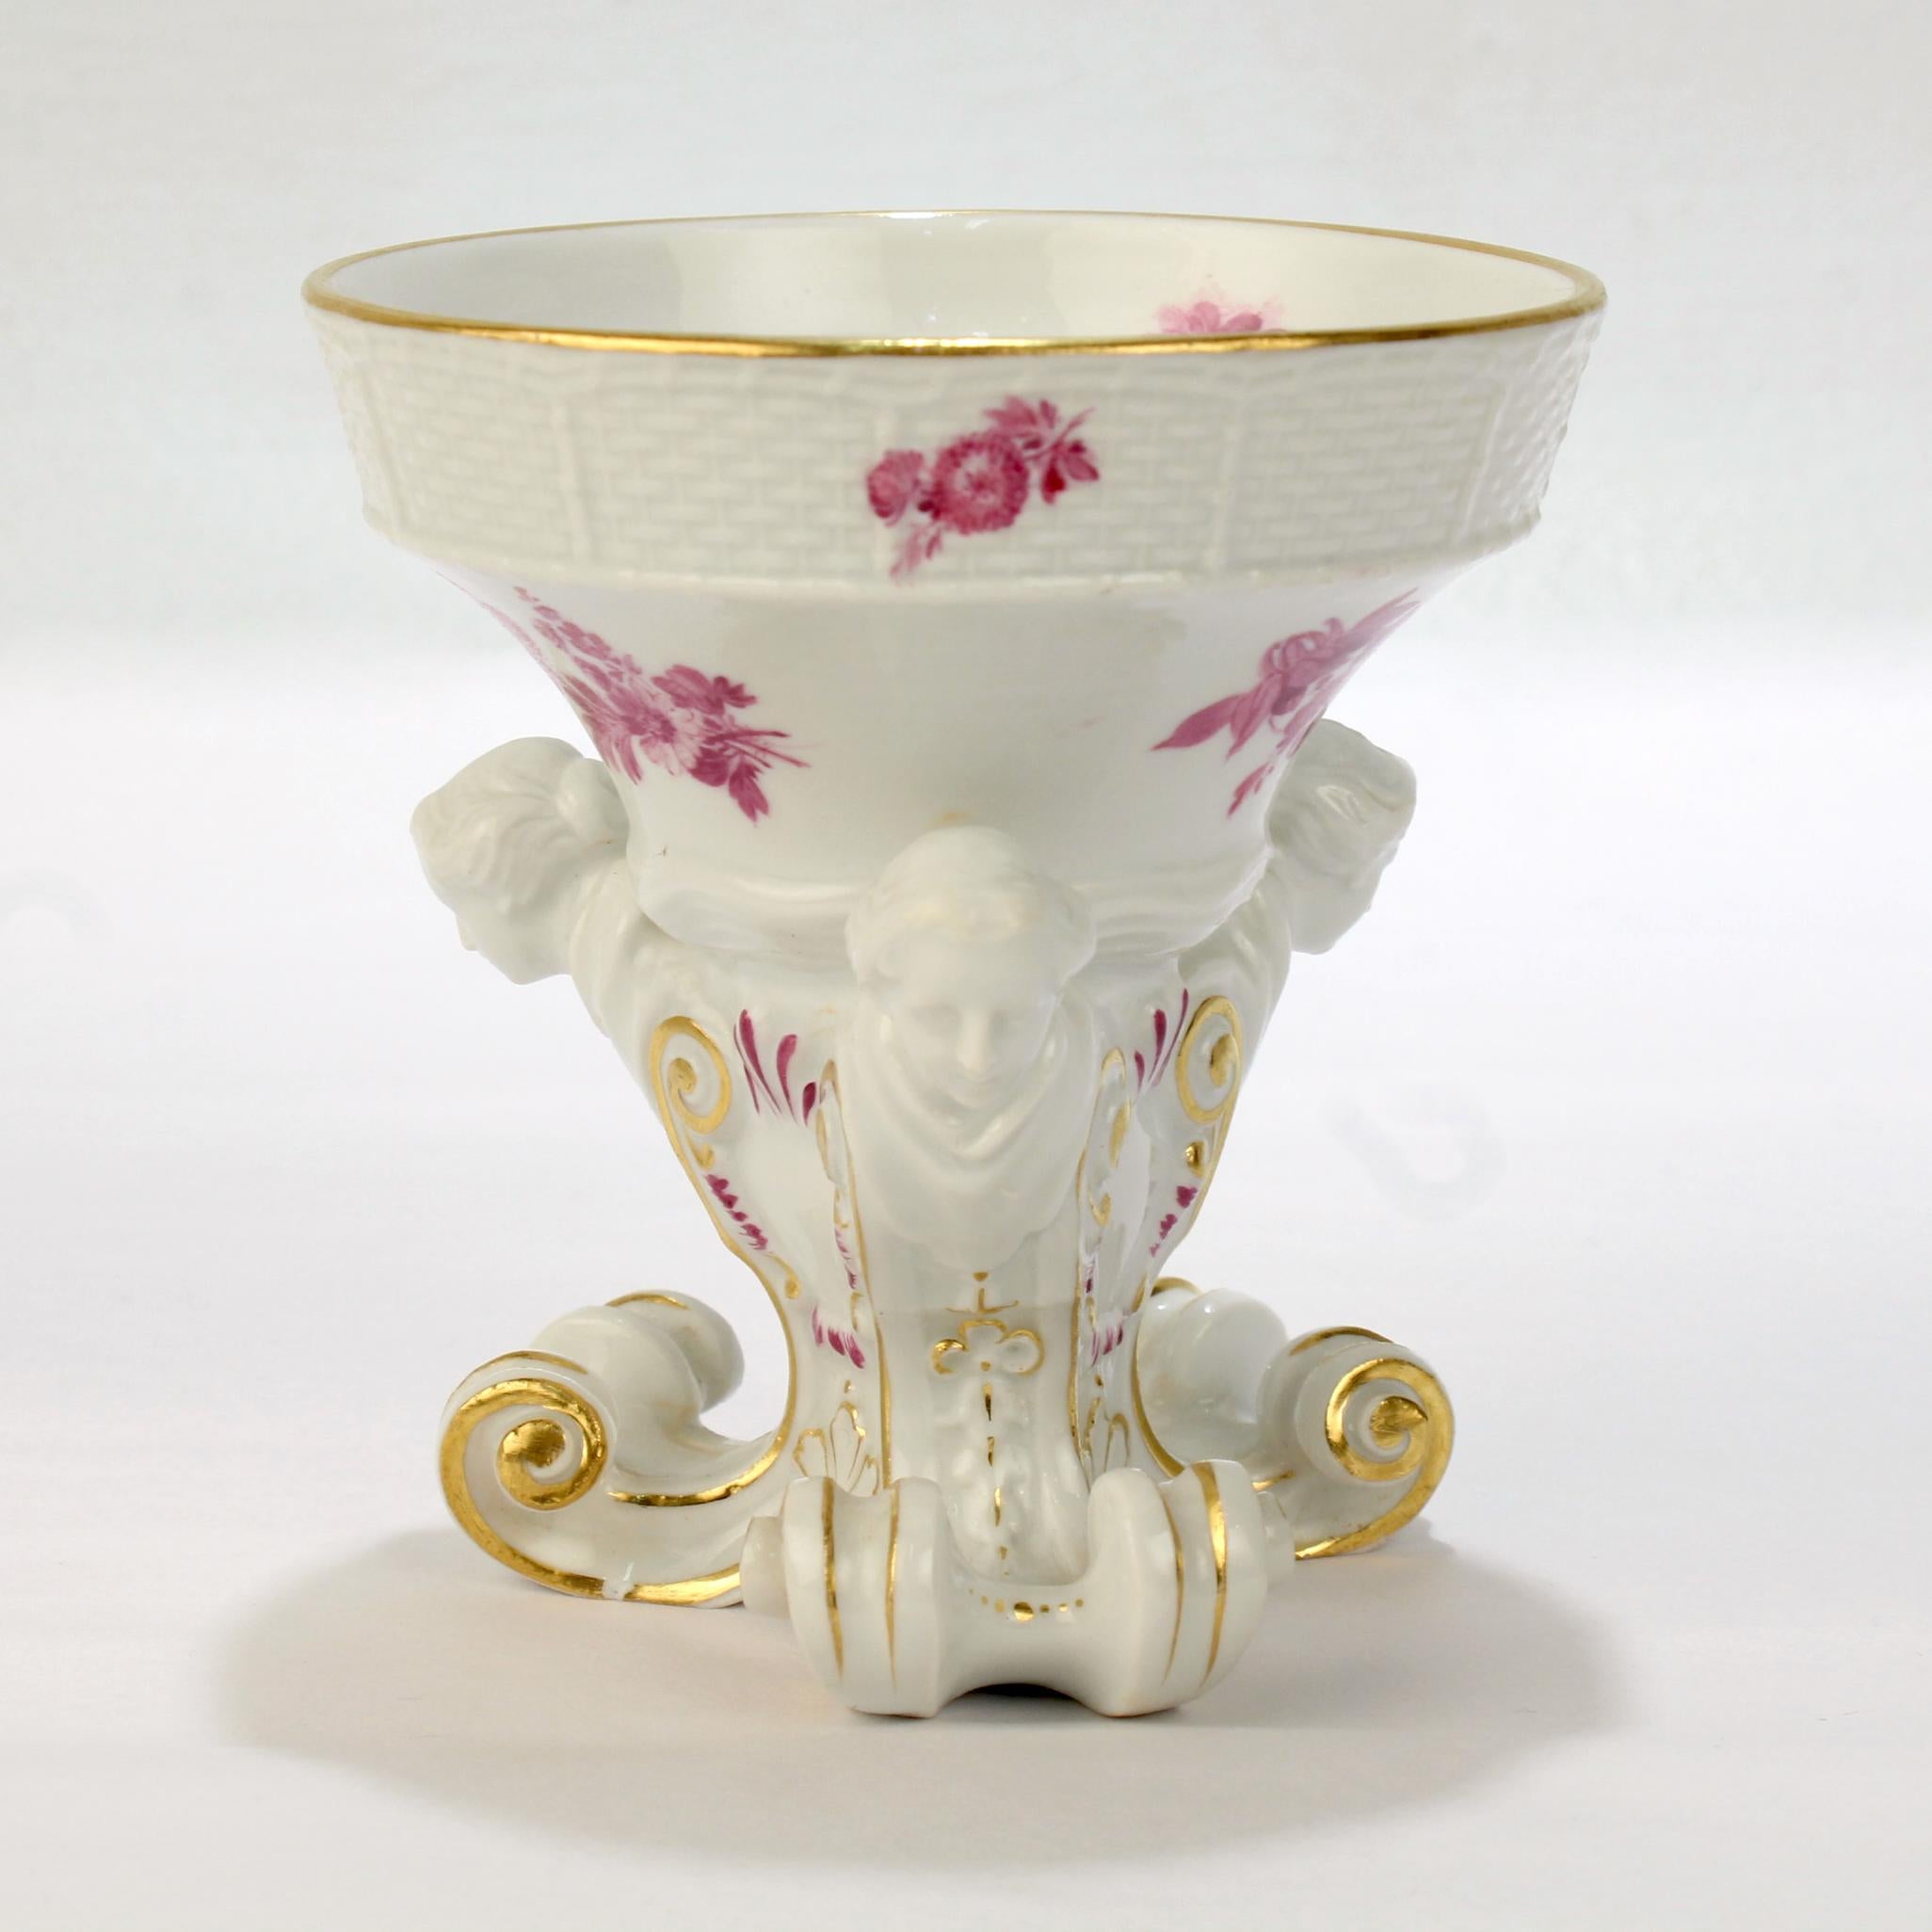 4 Antique Meissen Porcelain Footed Frauenkopf Salt Cellars with Puce Flowers For Sale 3